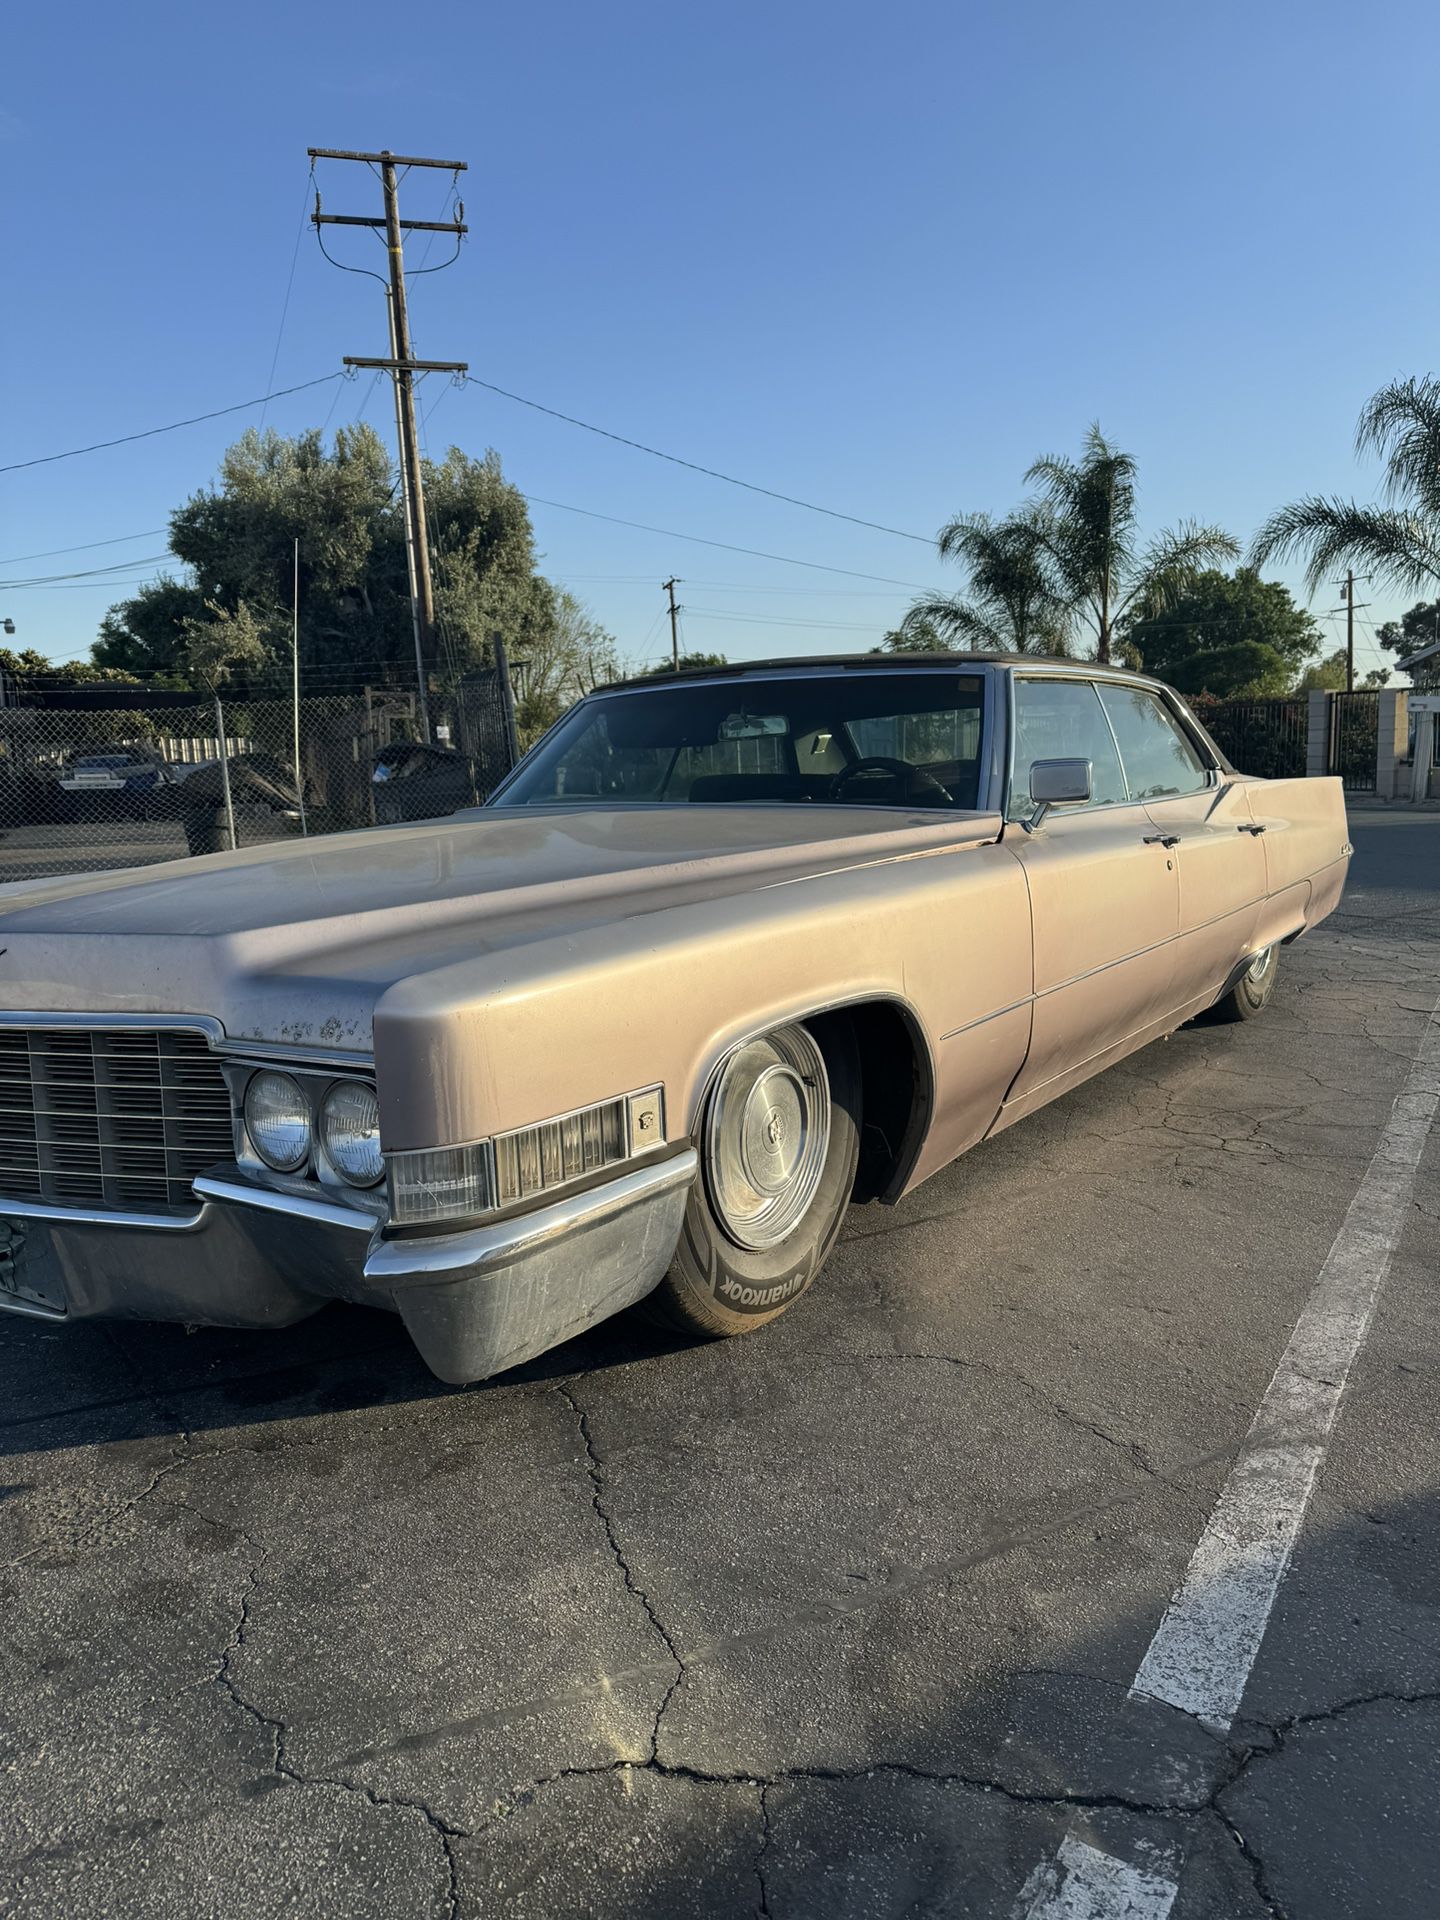 1969 Cadillac 